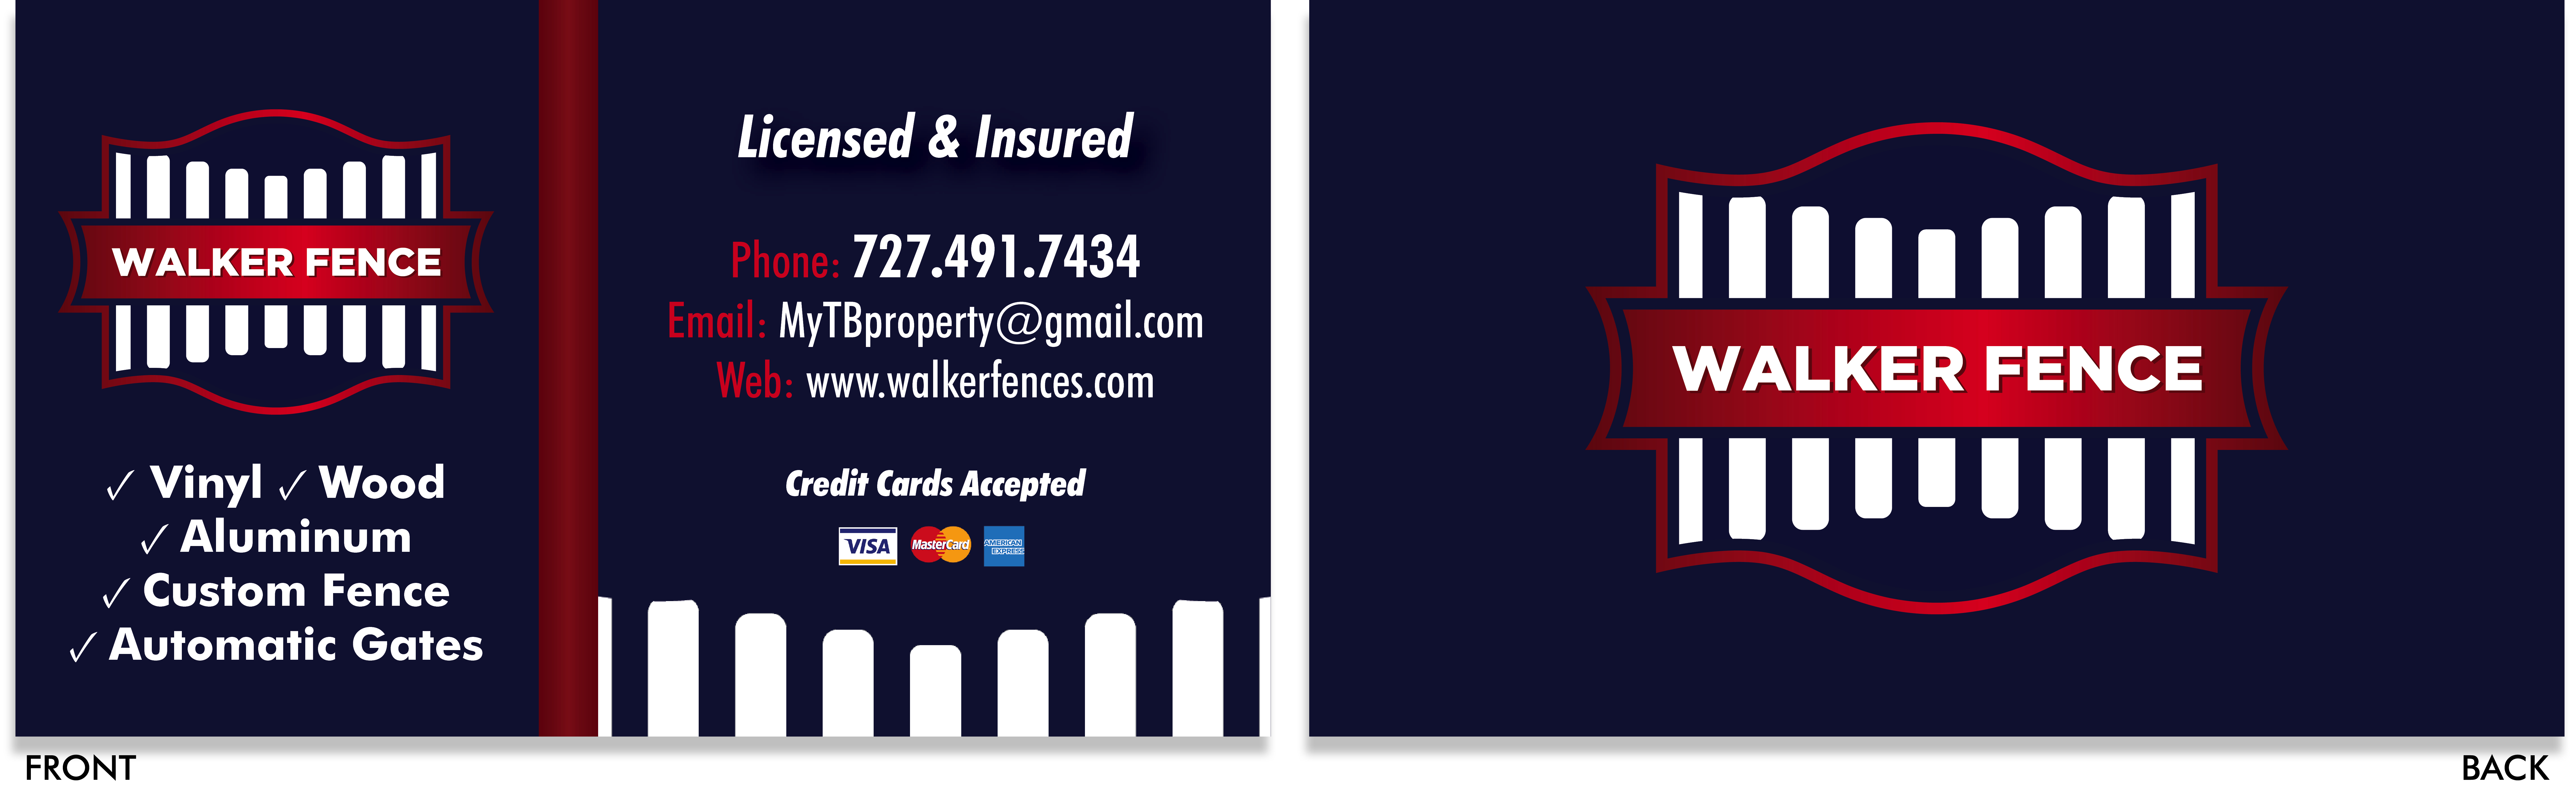 Walker Fence Business Card